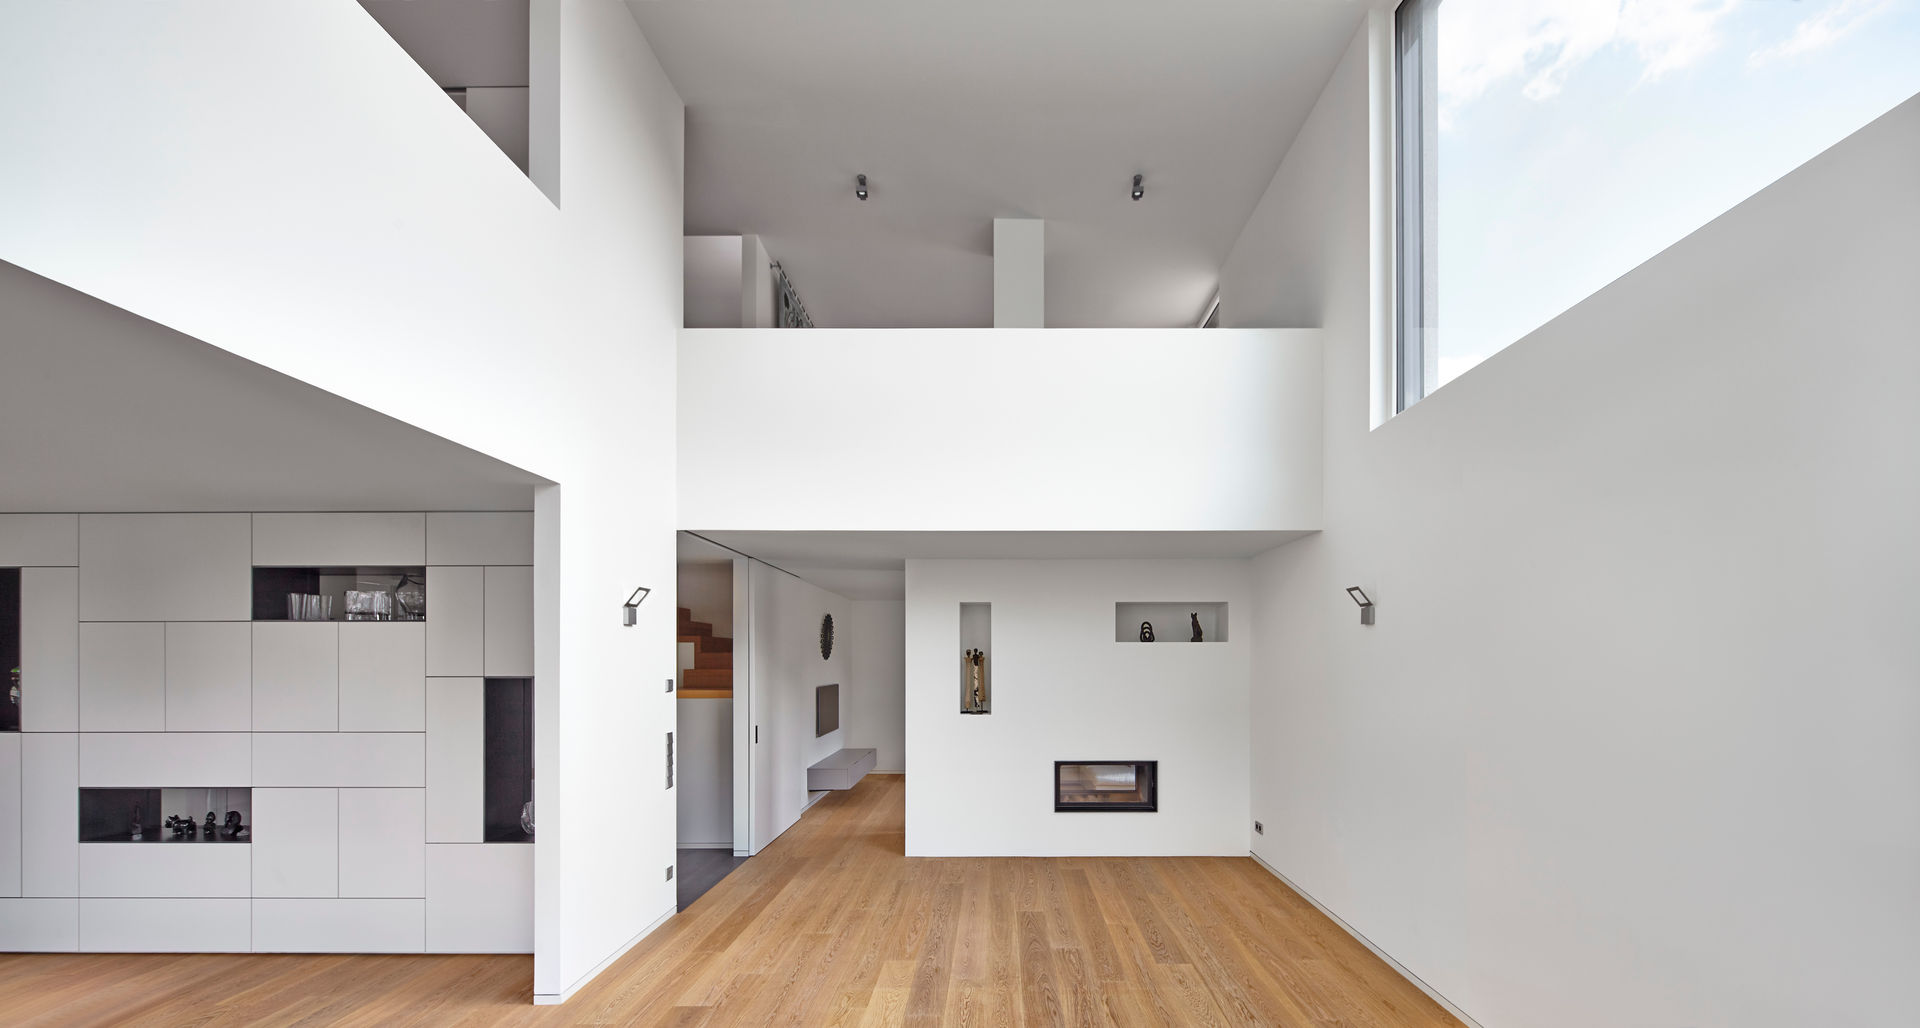 Einfamilienhaus in Niedrigenergiebauweise, Bruck + Weckerle Architekten Bruck + Weckerle Architekten Living room